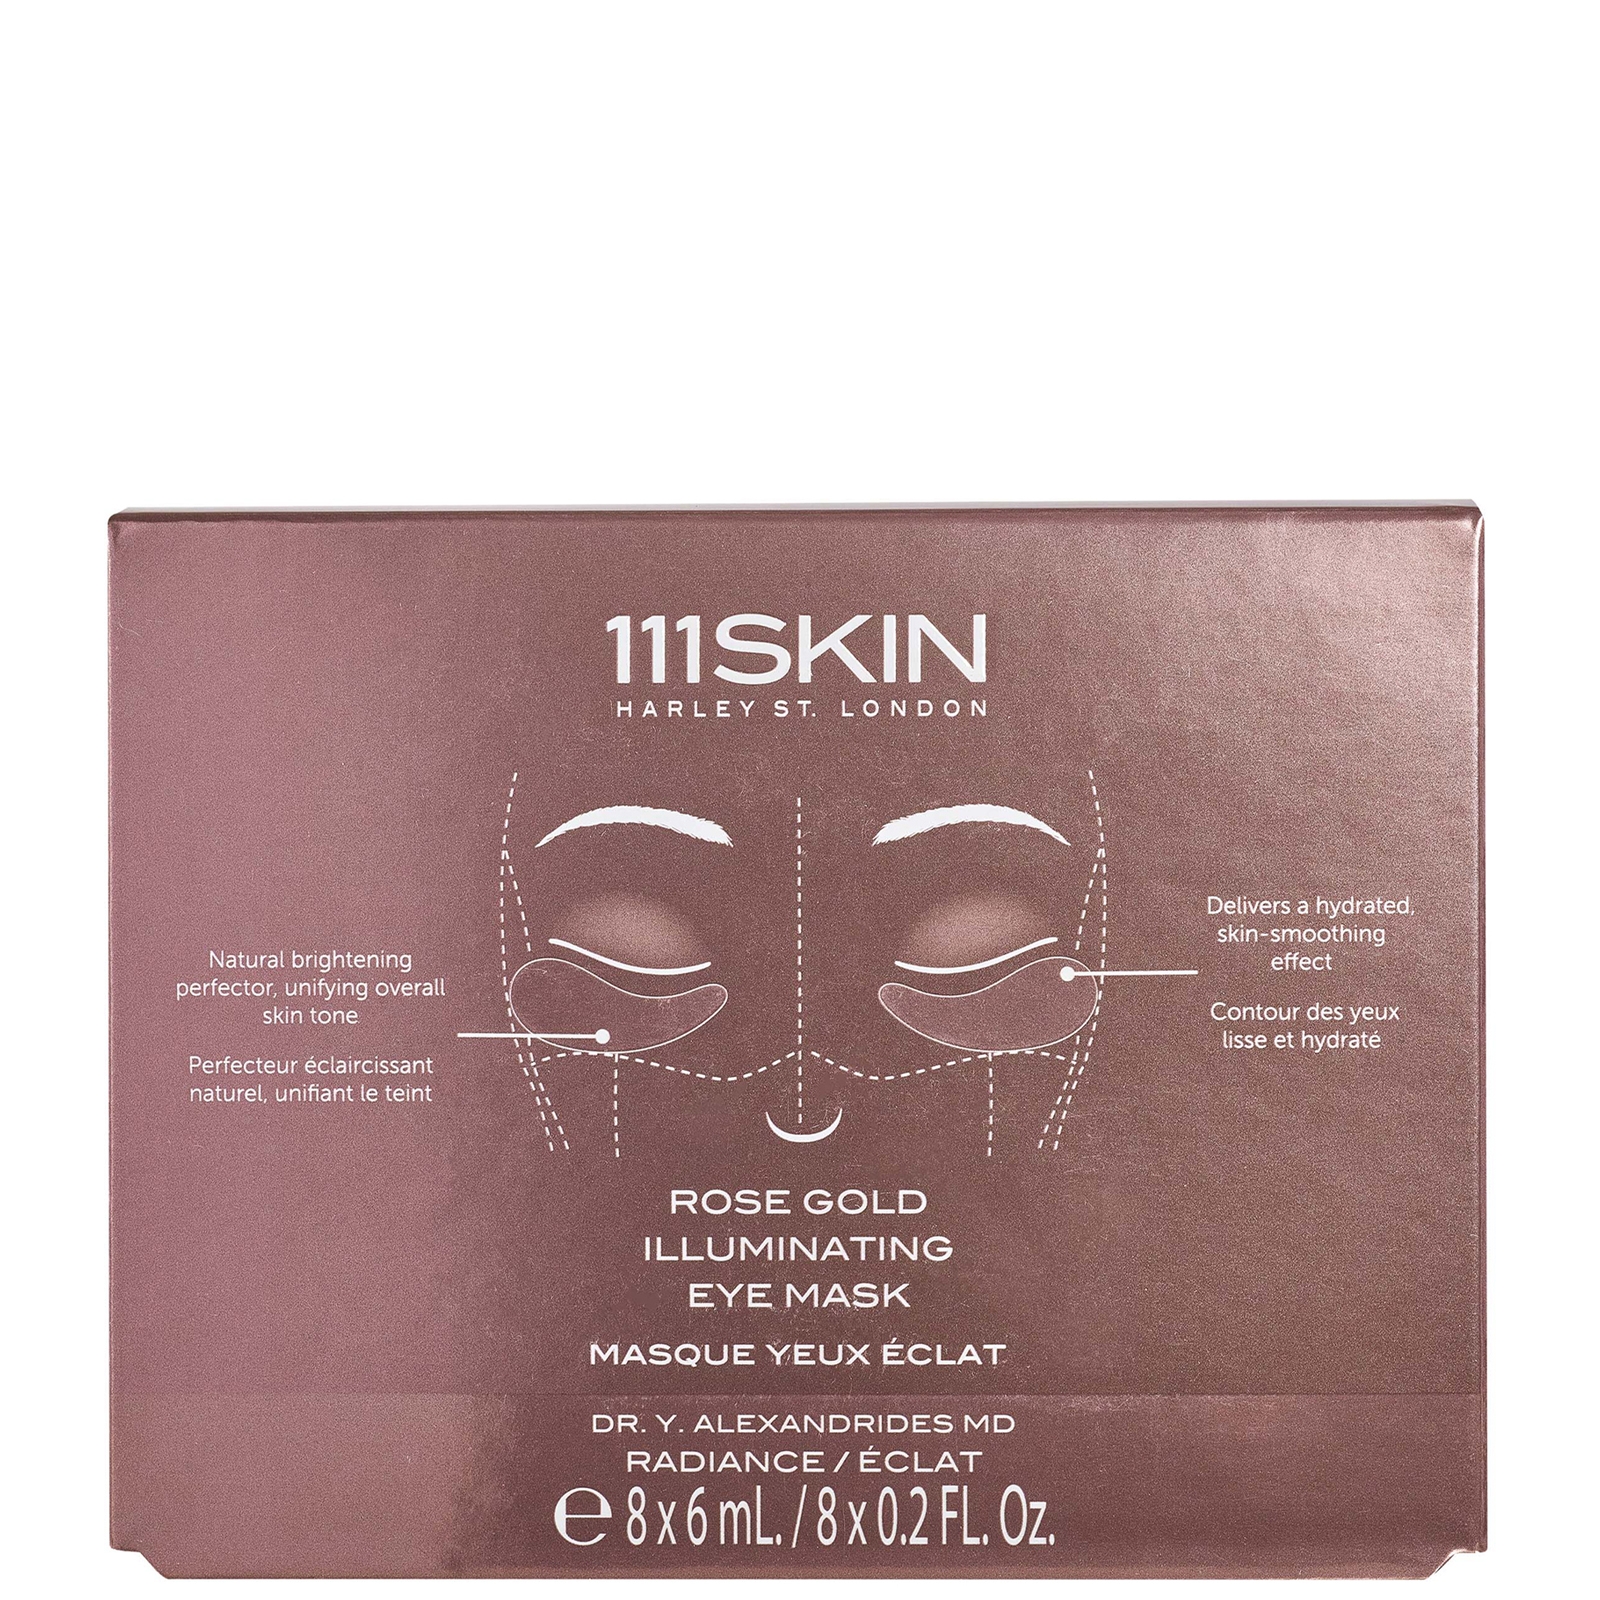 111SKIN Rose Gold Illuminating Eye Mask (Various Options) - 8 x 6ml